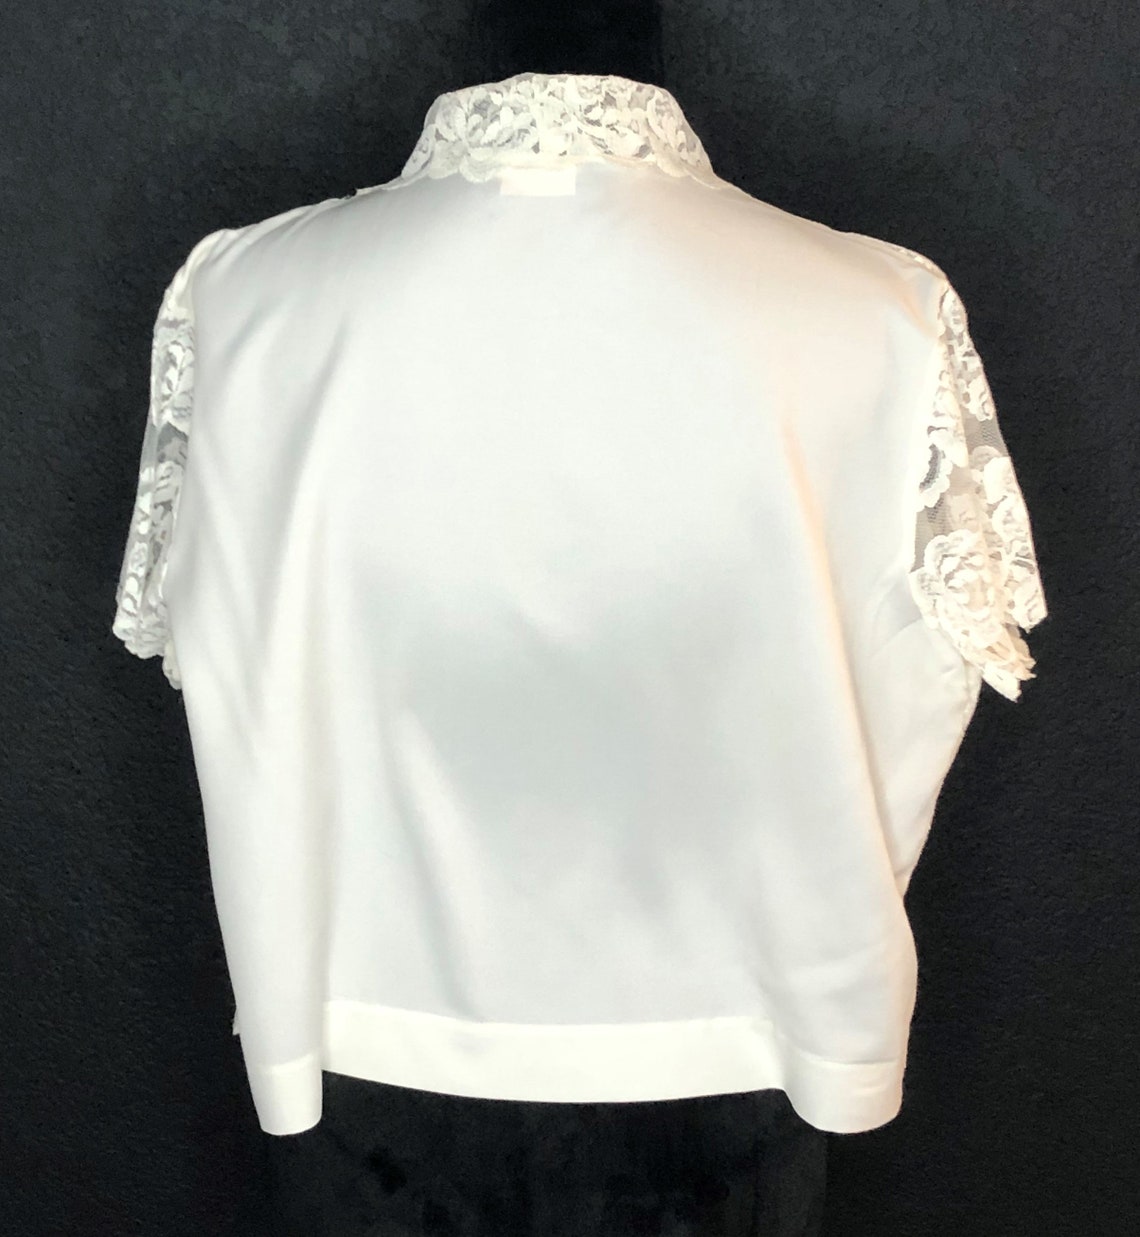 Vintage 1940's JAMI ORIGINALS Lace Front Short Sleeve Top Shirt Blouse ...